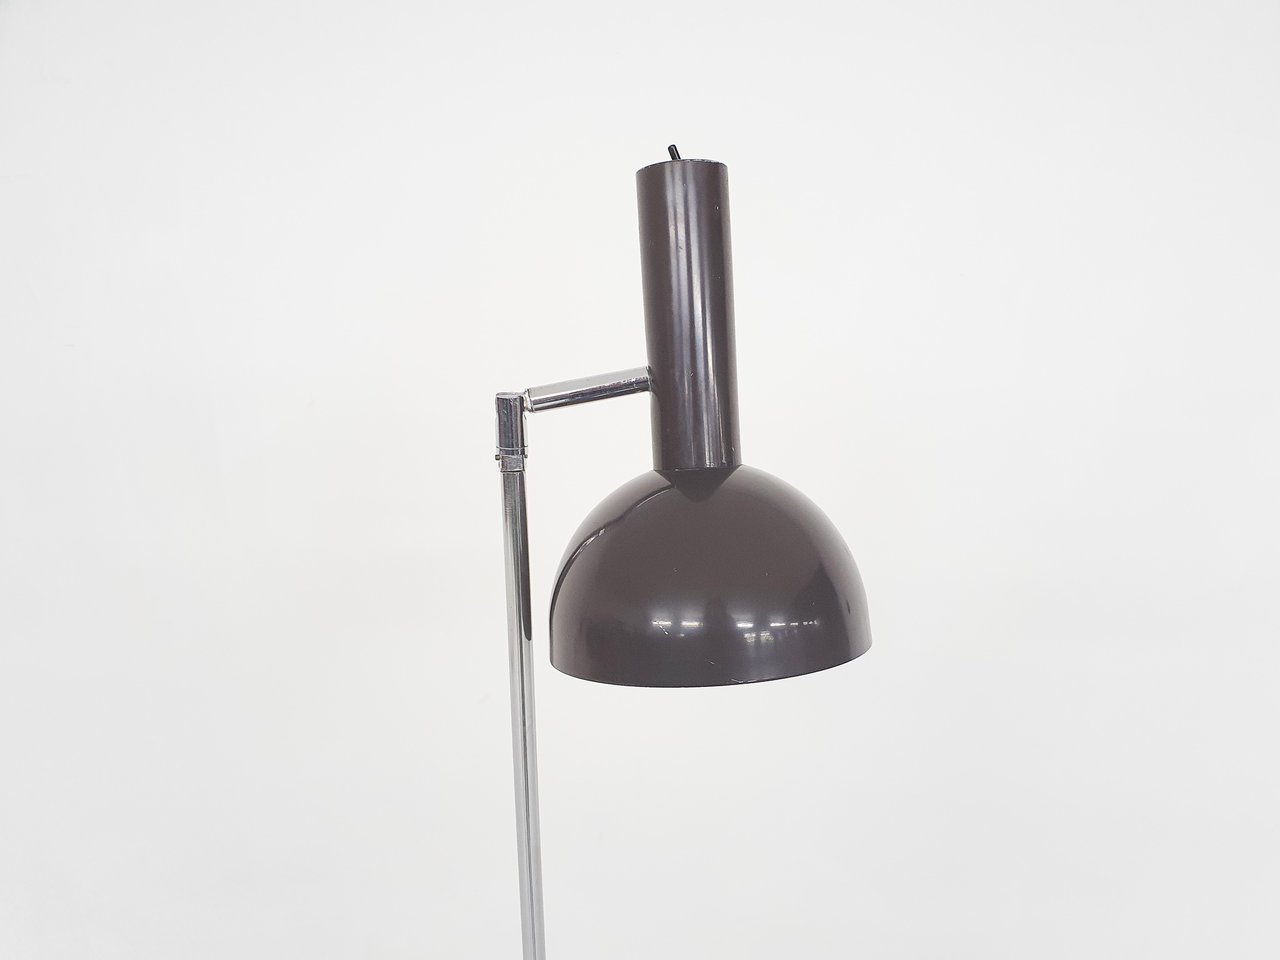 Image 38 of Hala adjustable floor lamp by Busquet